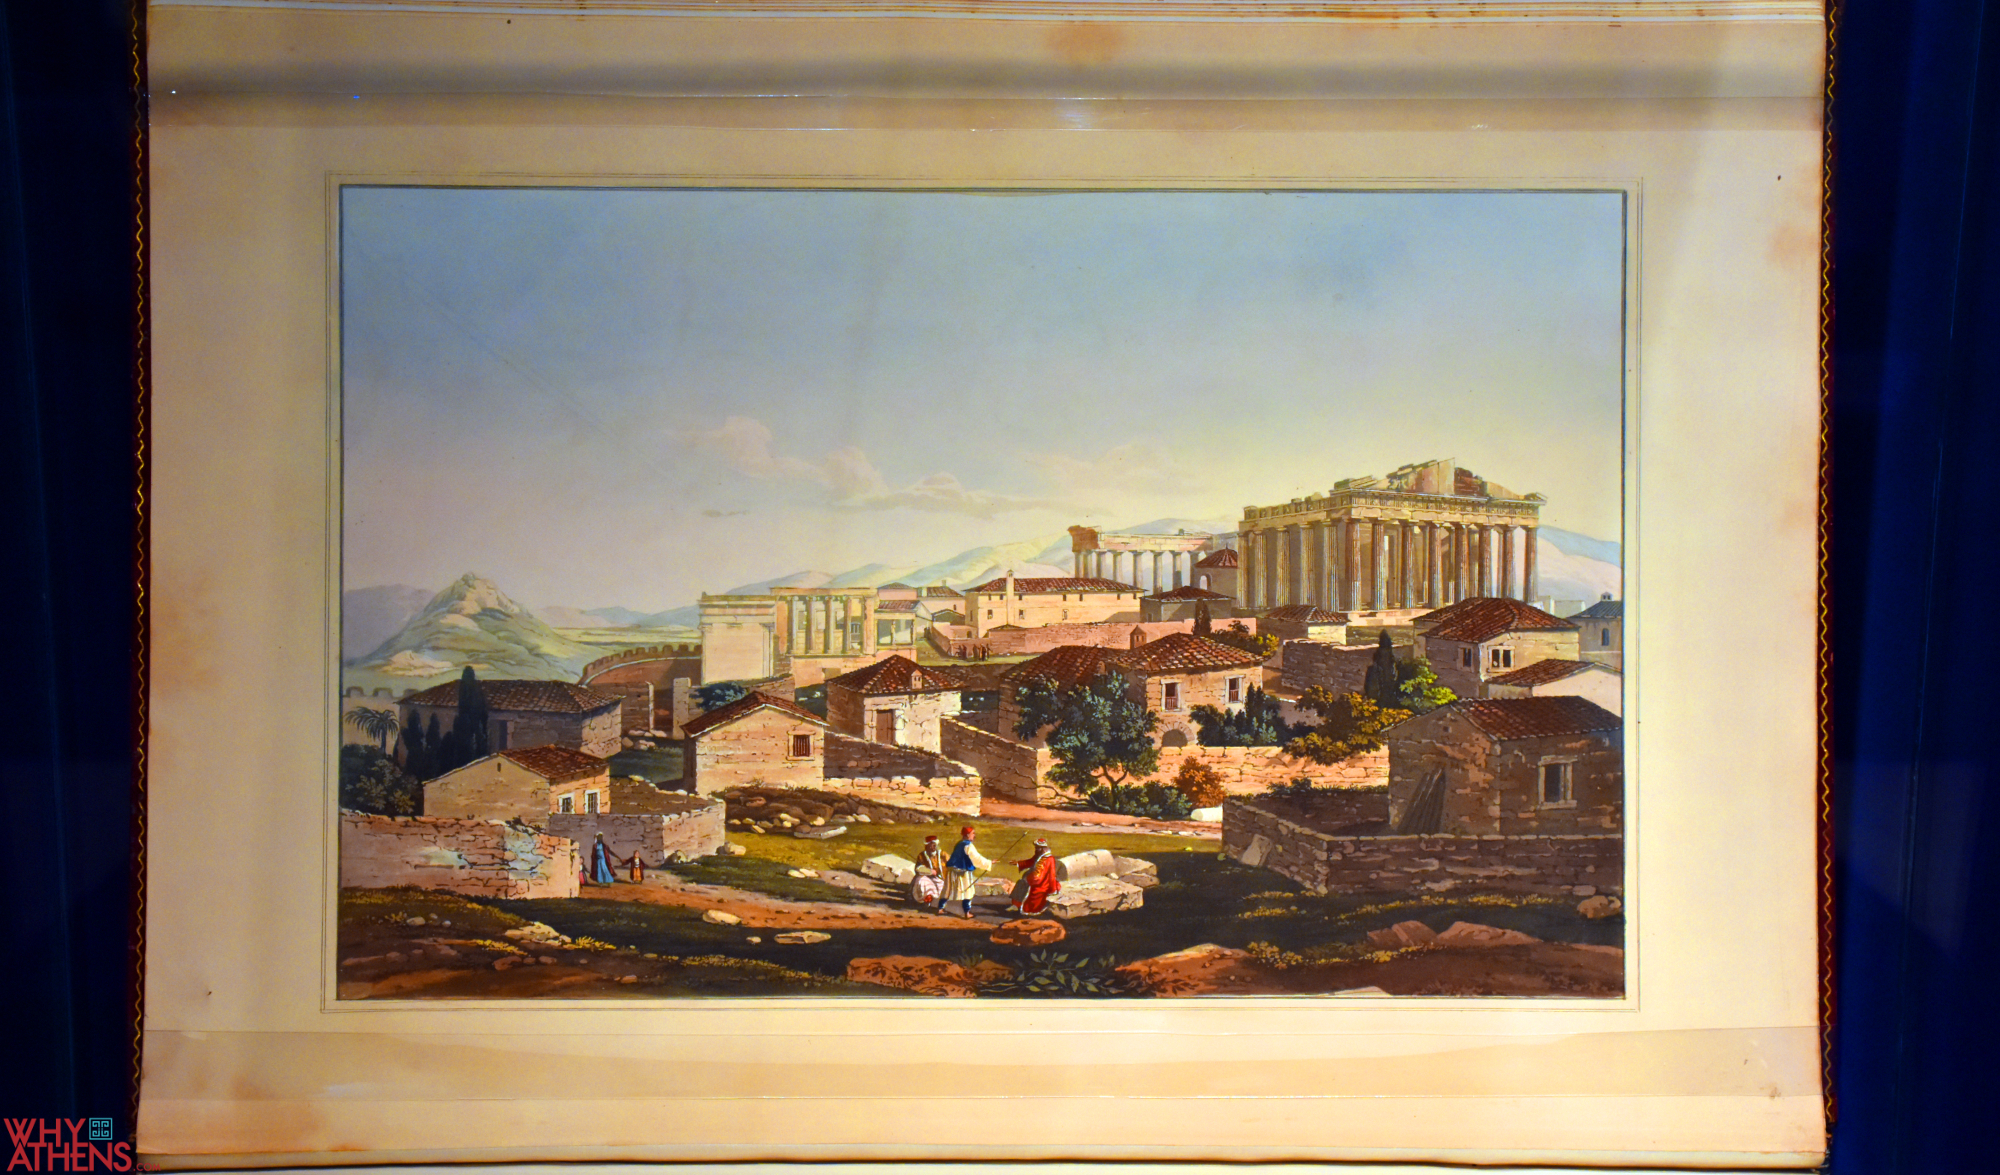 A Dream among Splendid Ruins - Why Athens